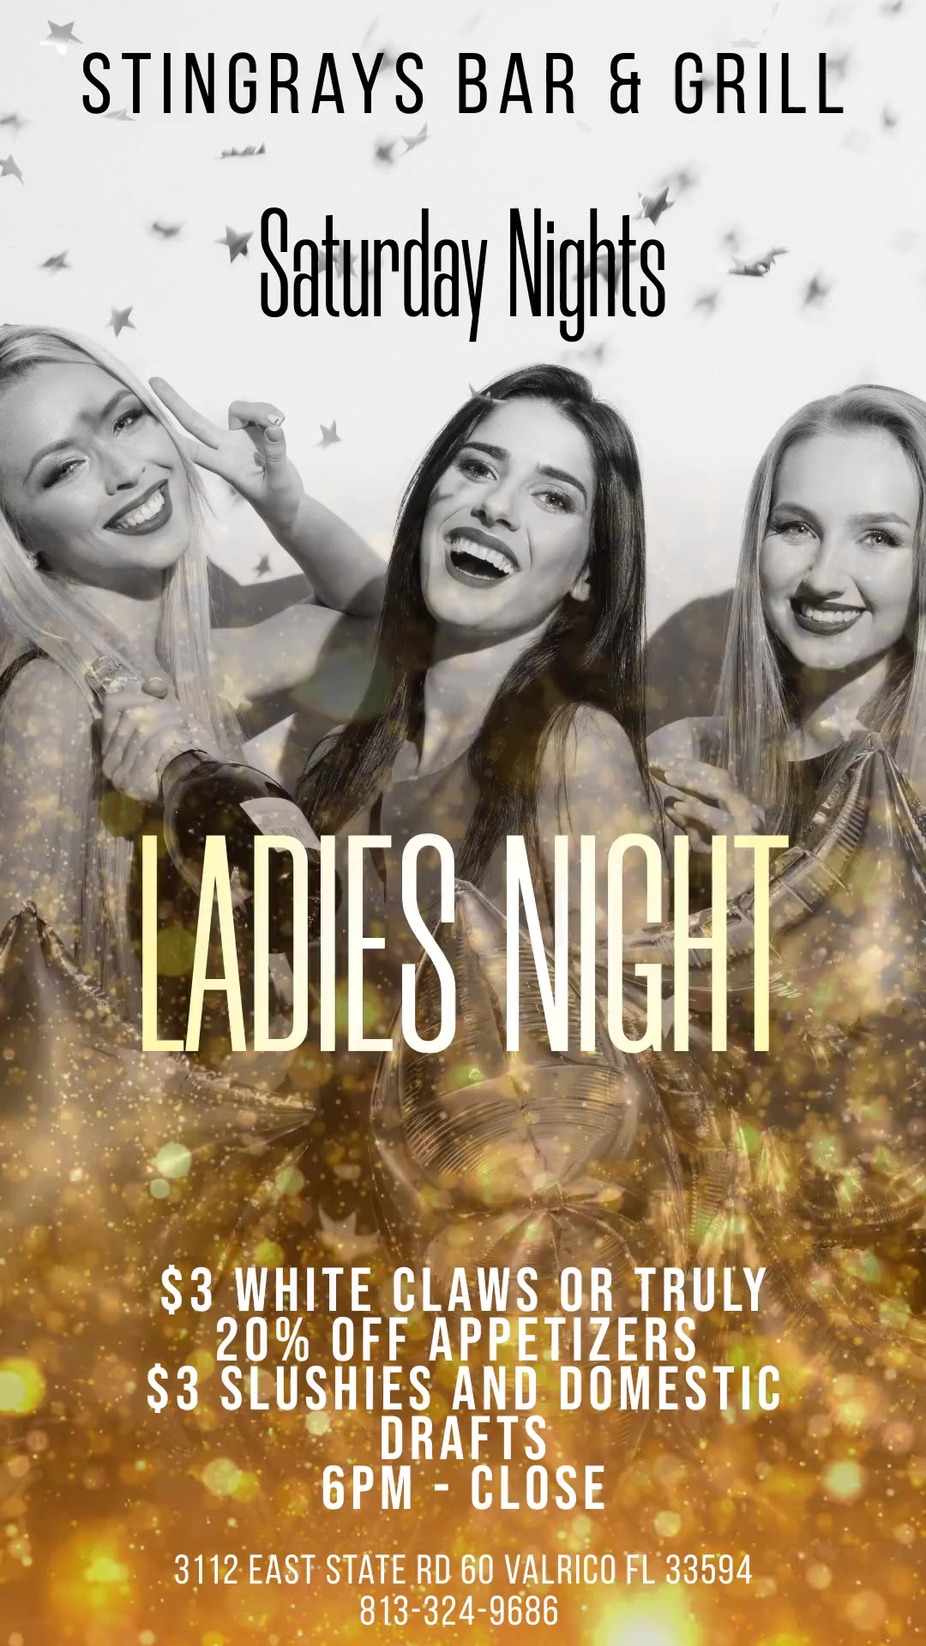 LADIES NIGHT event photo